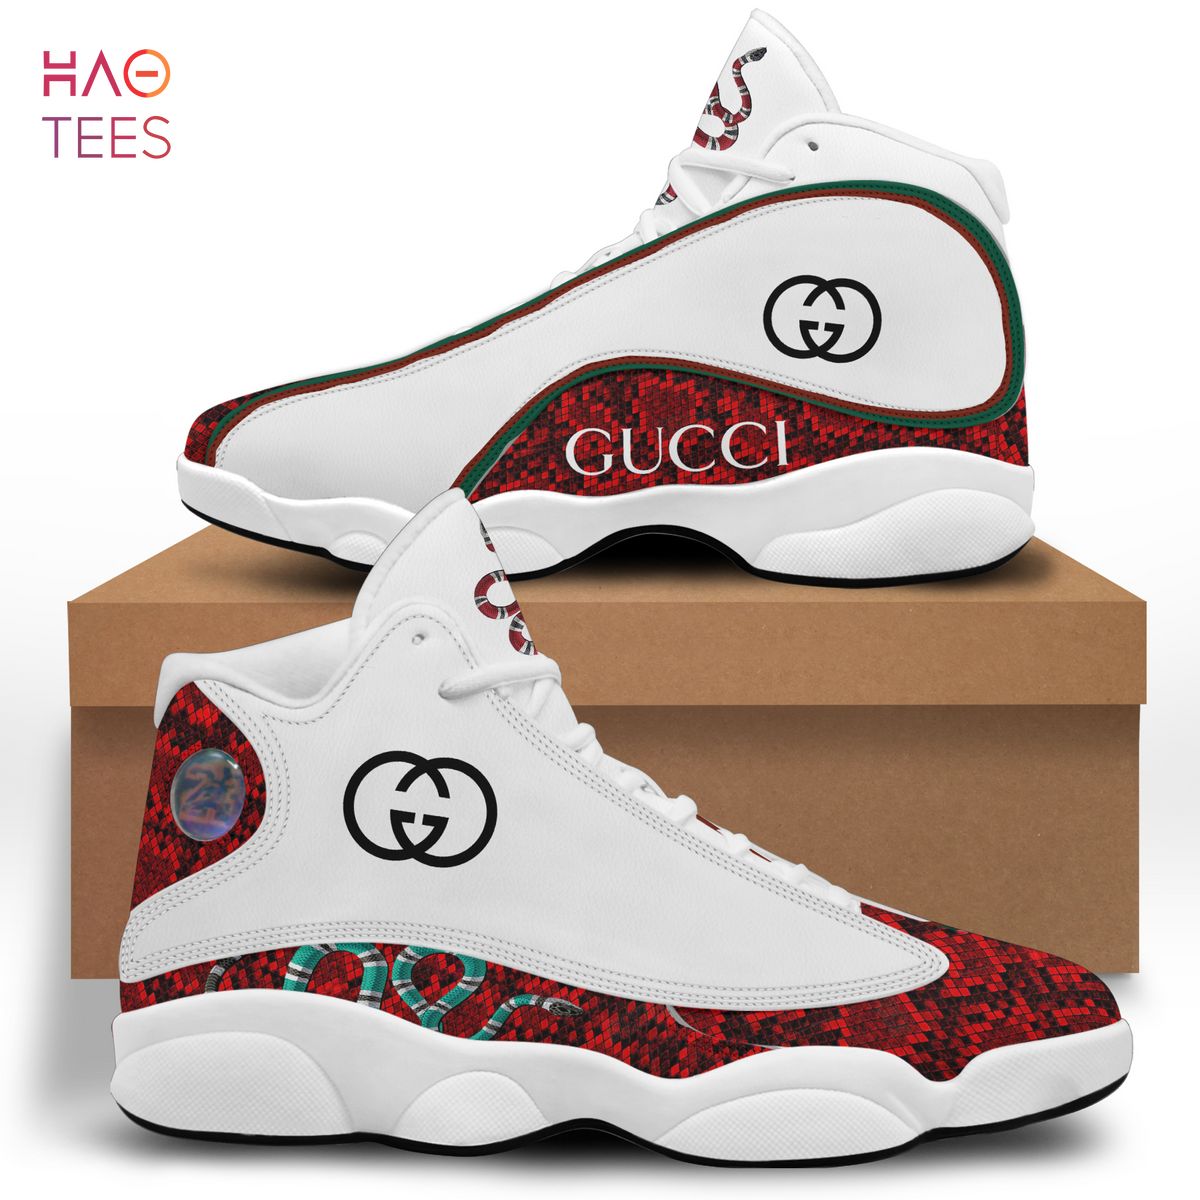 Gucci flower air jordan 13 sneakers shoes hot unisex